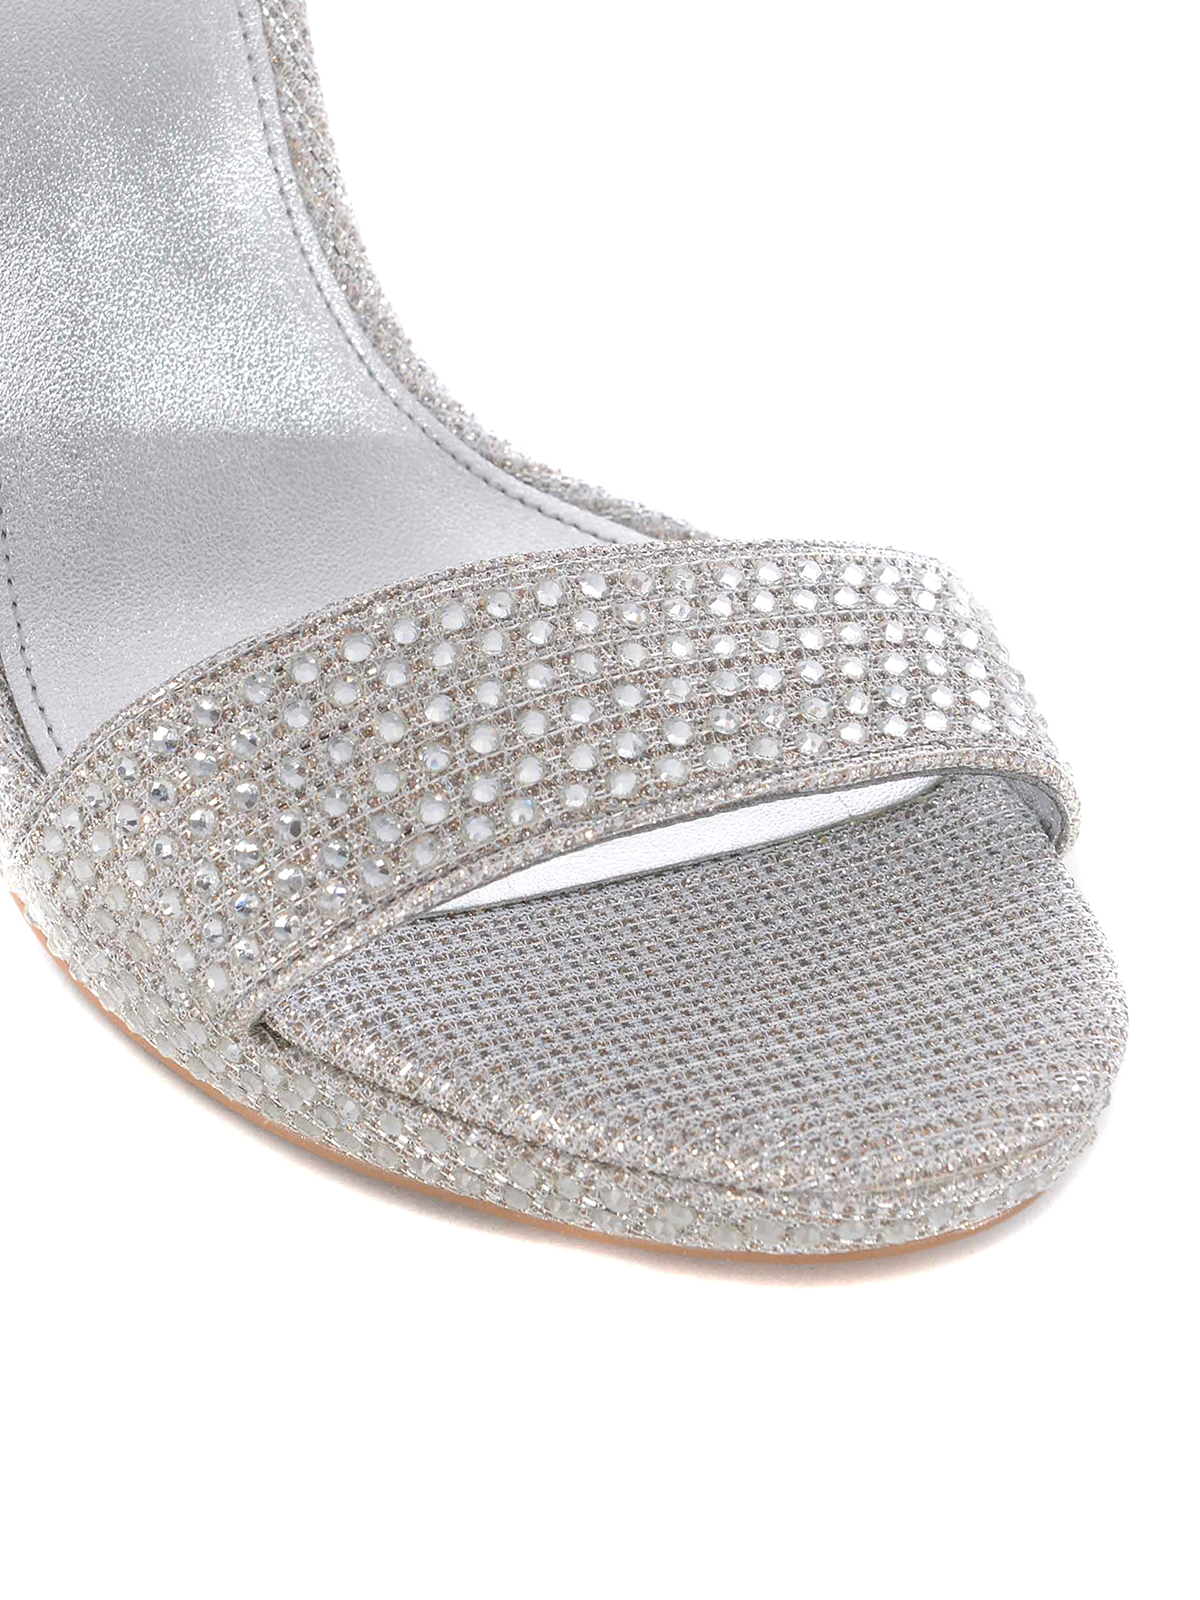 Sandals Michael Kors - Hutton silver rhinestone sandals - 40R9HUHA1D900